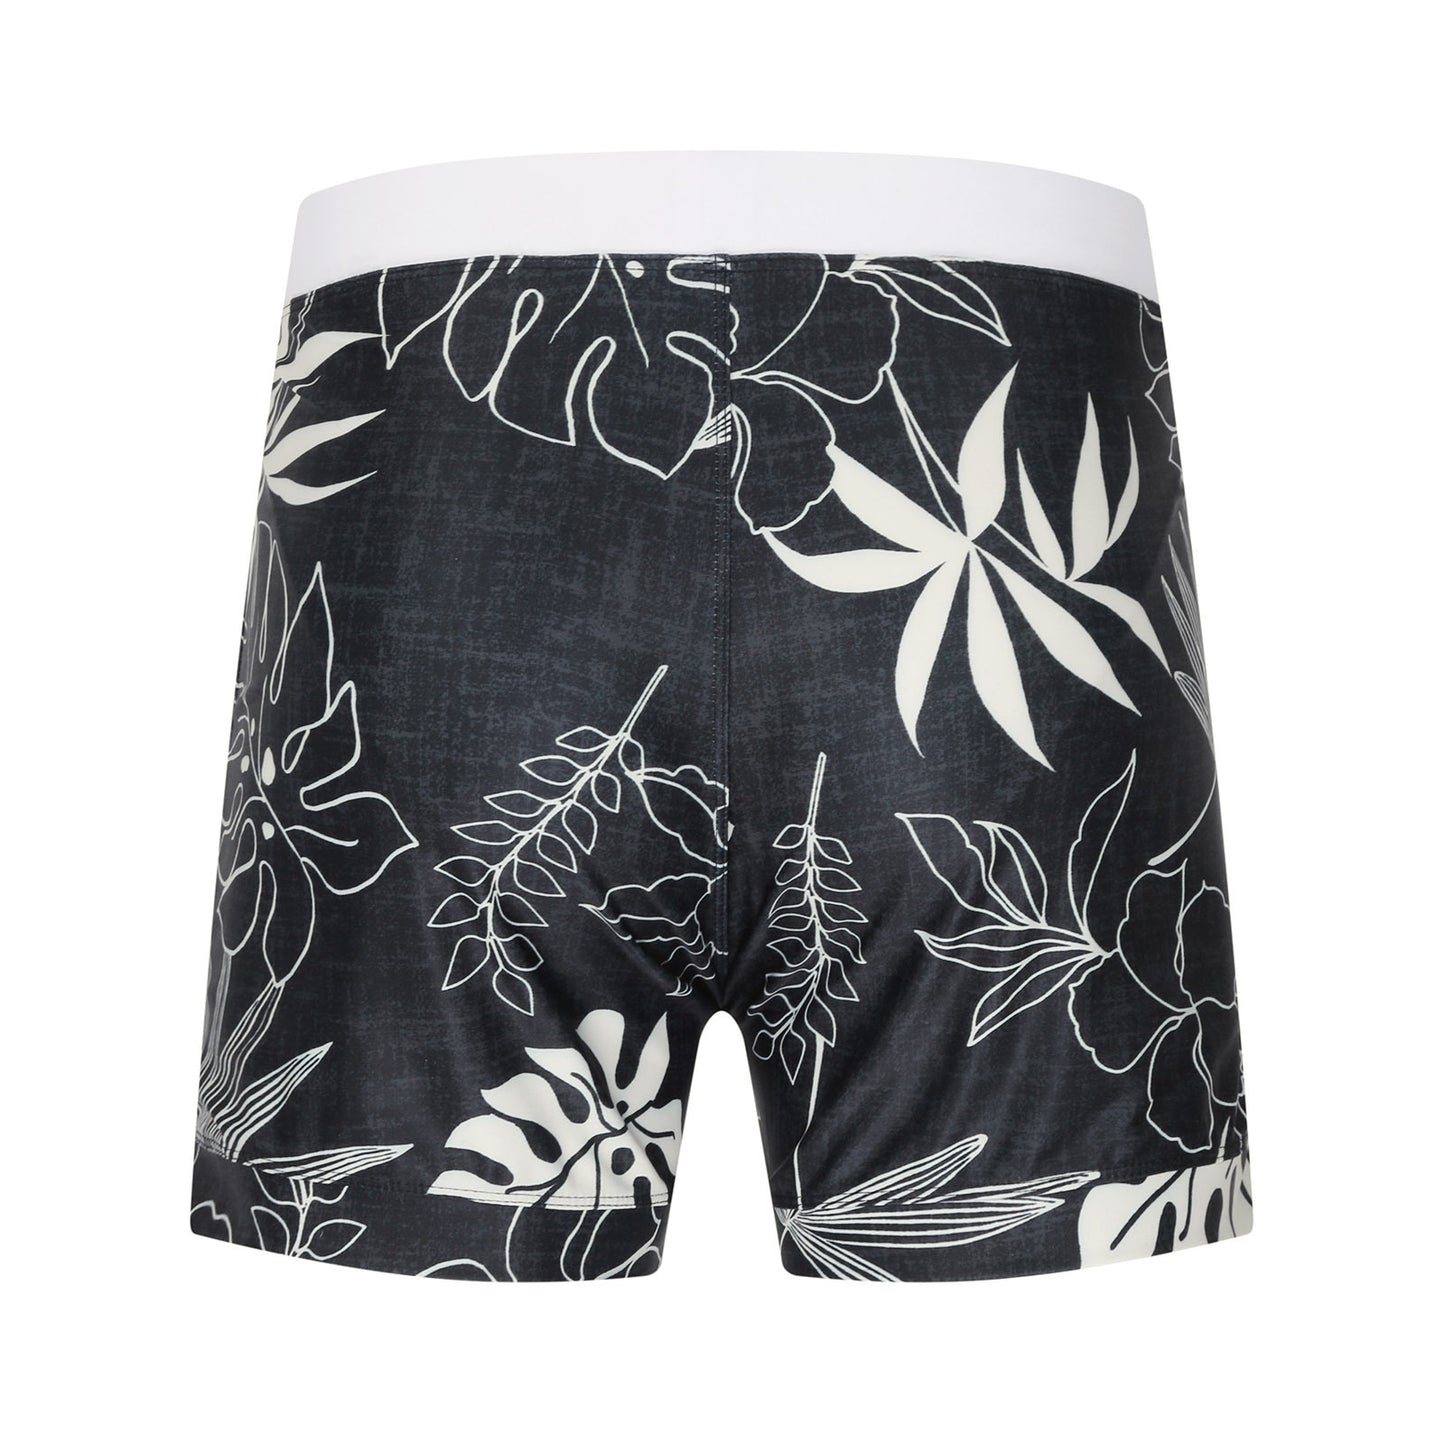 Men's Leaves printed Summer Swimming Shorts